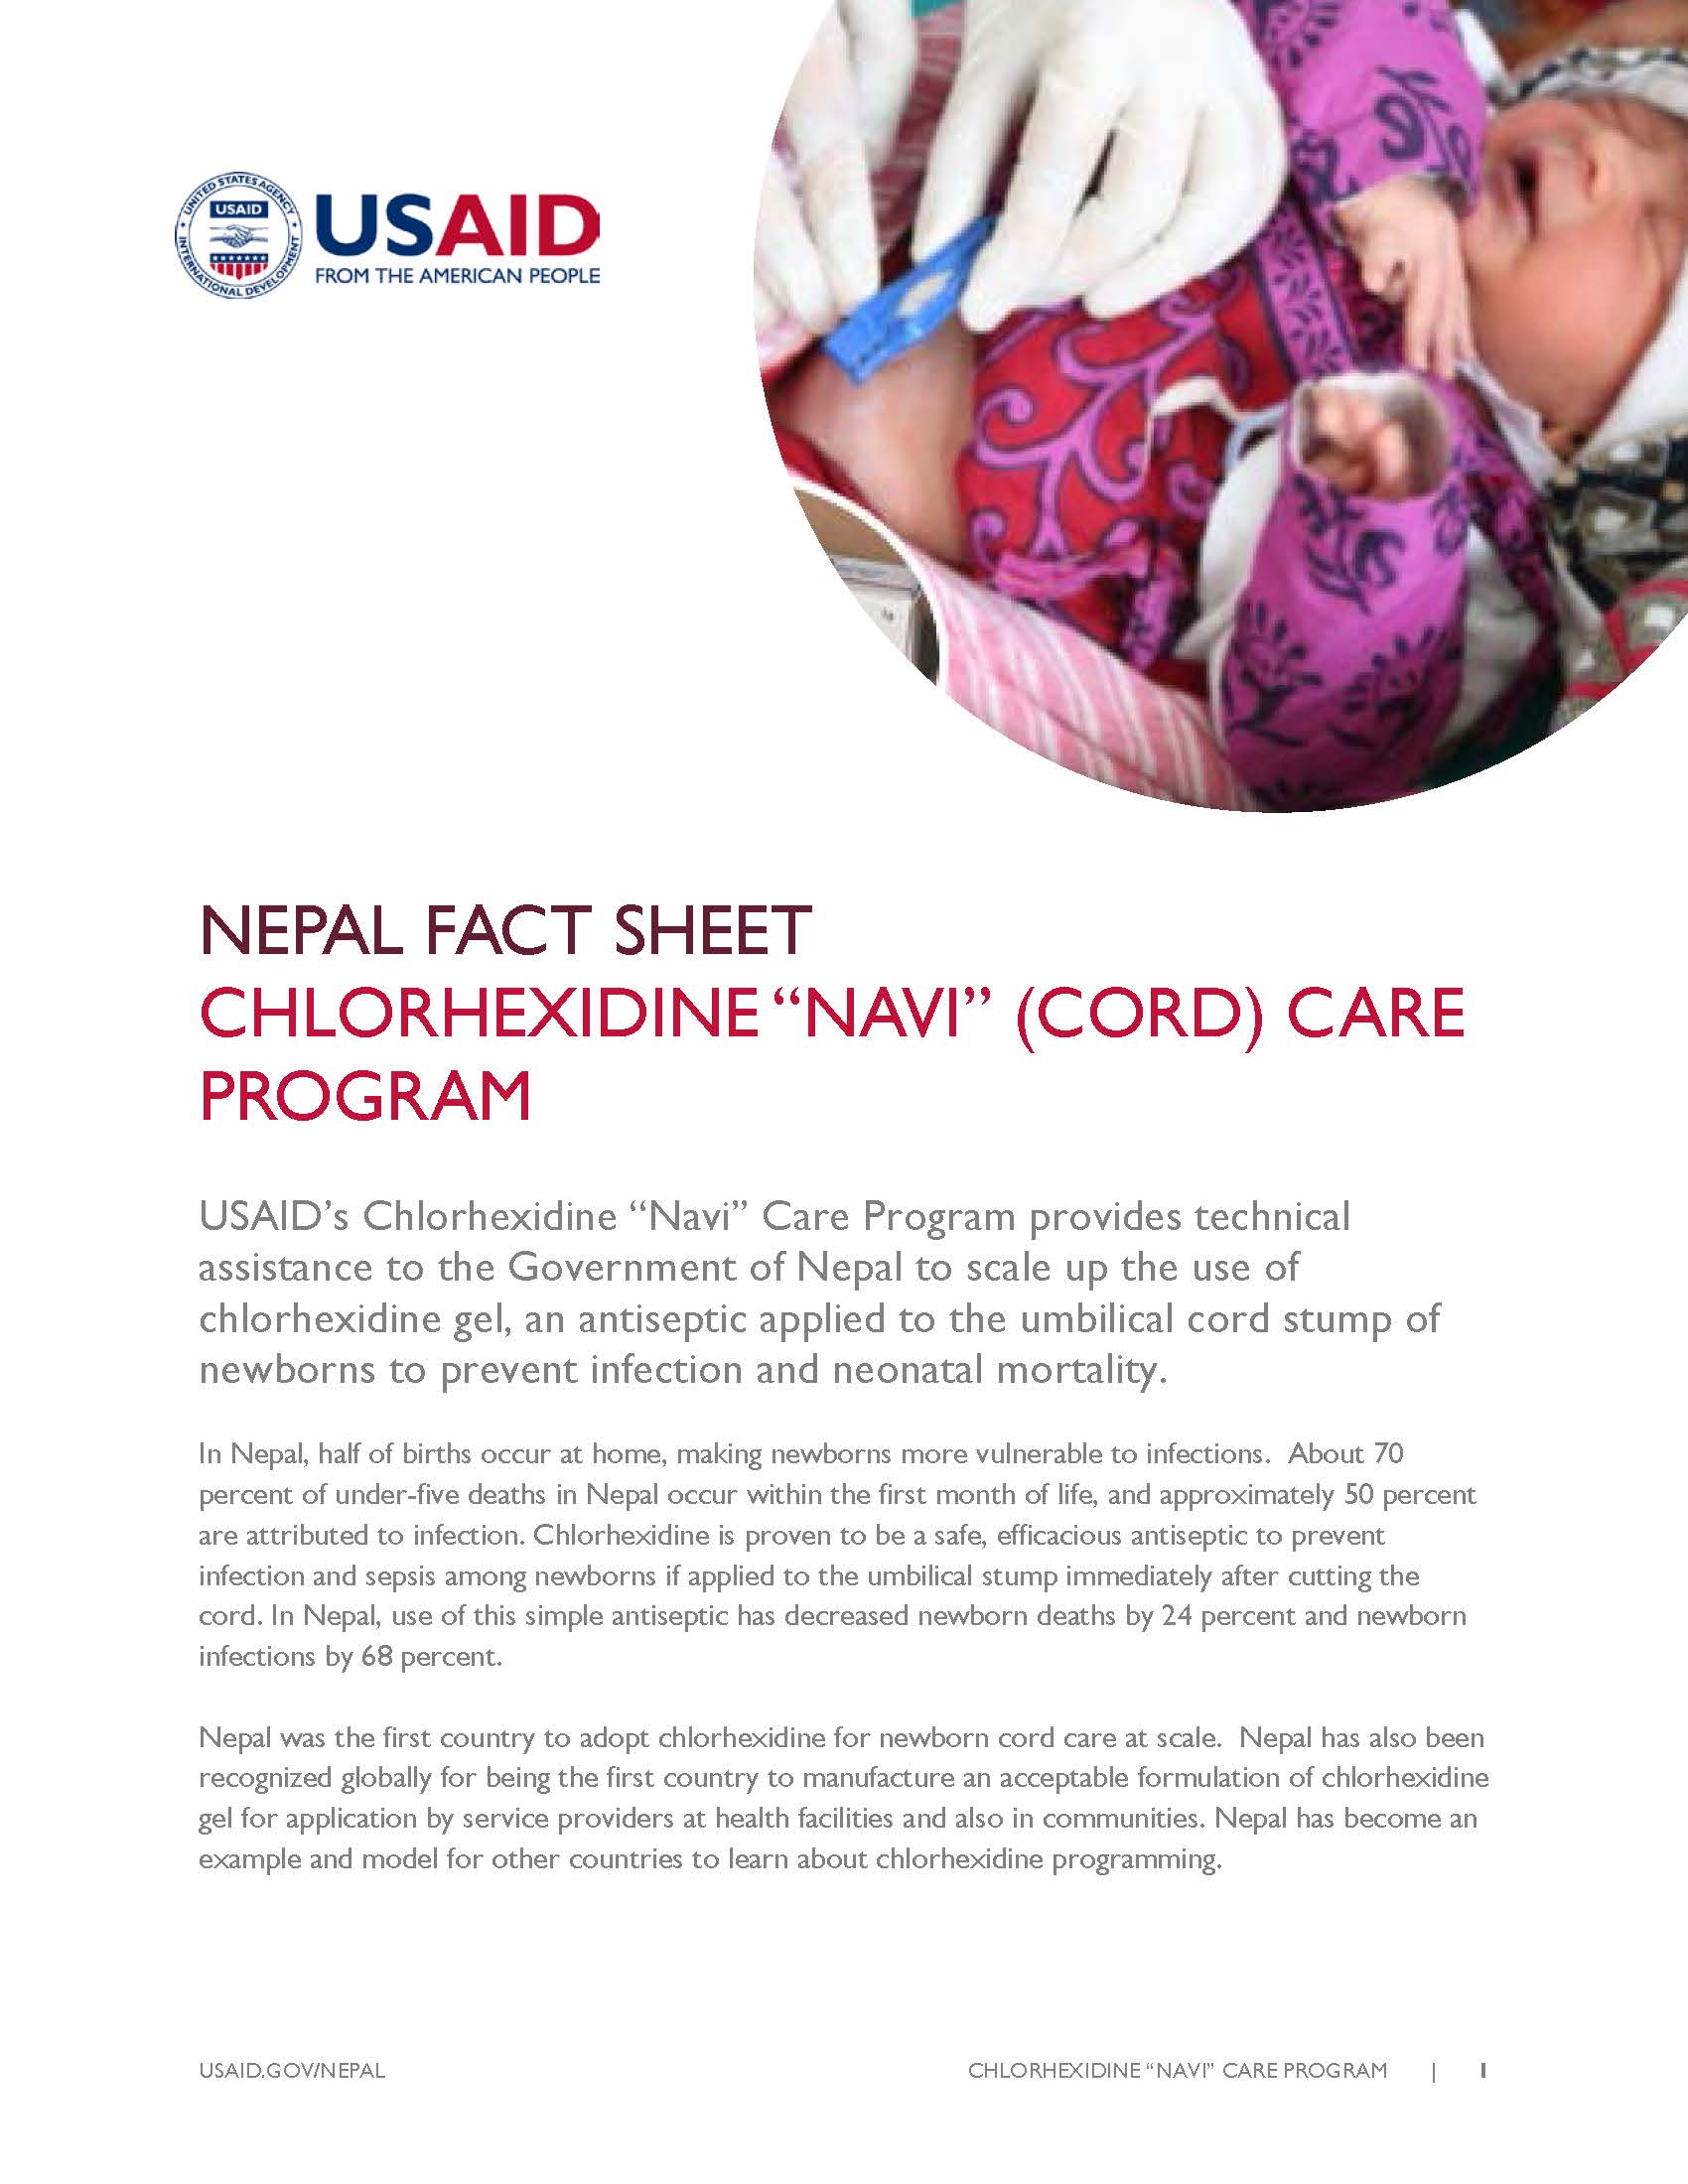 Fact Sheet: CHLORHEXIDINE “NAVI” (CORD) CARE PROGRAM 